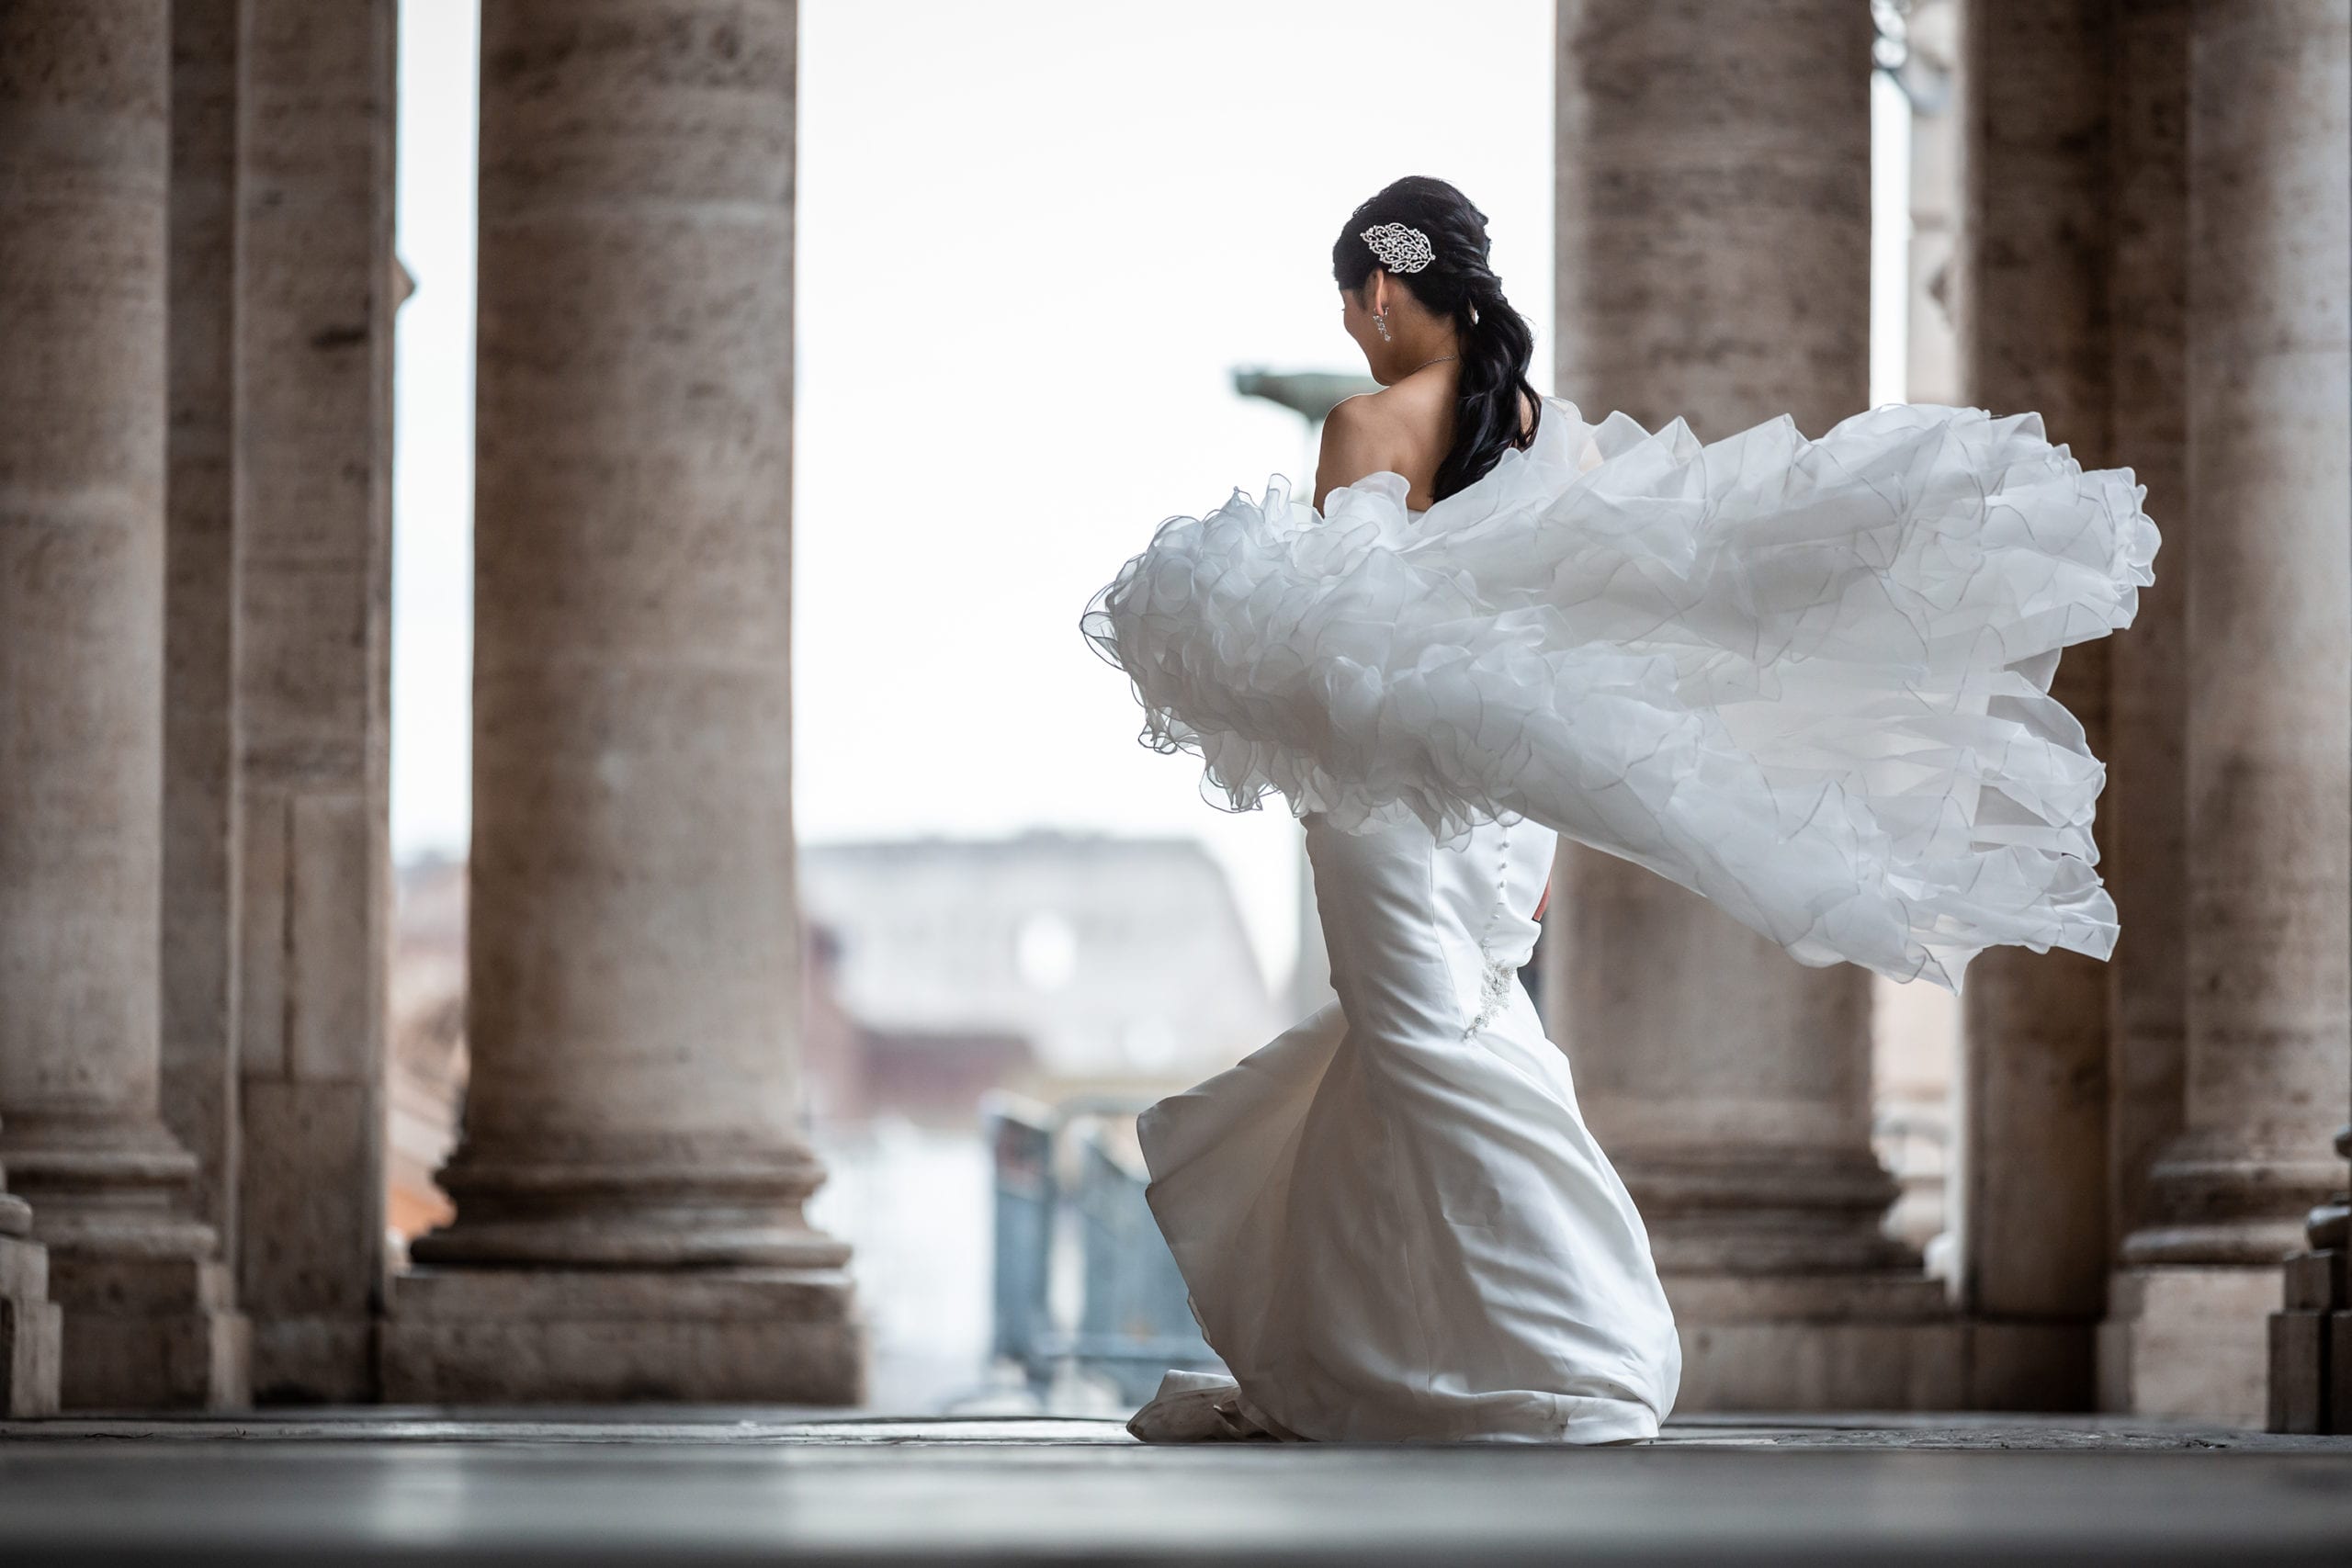 WEDDING italy dress 2022 trends rome columns bride